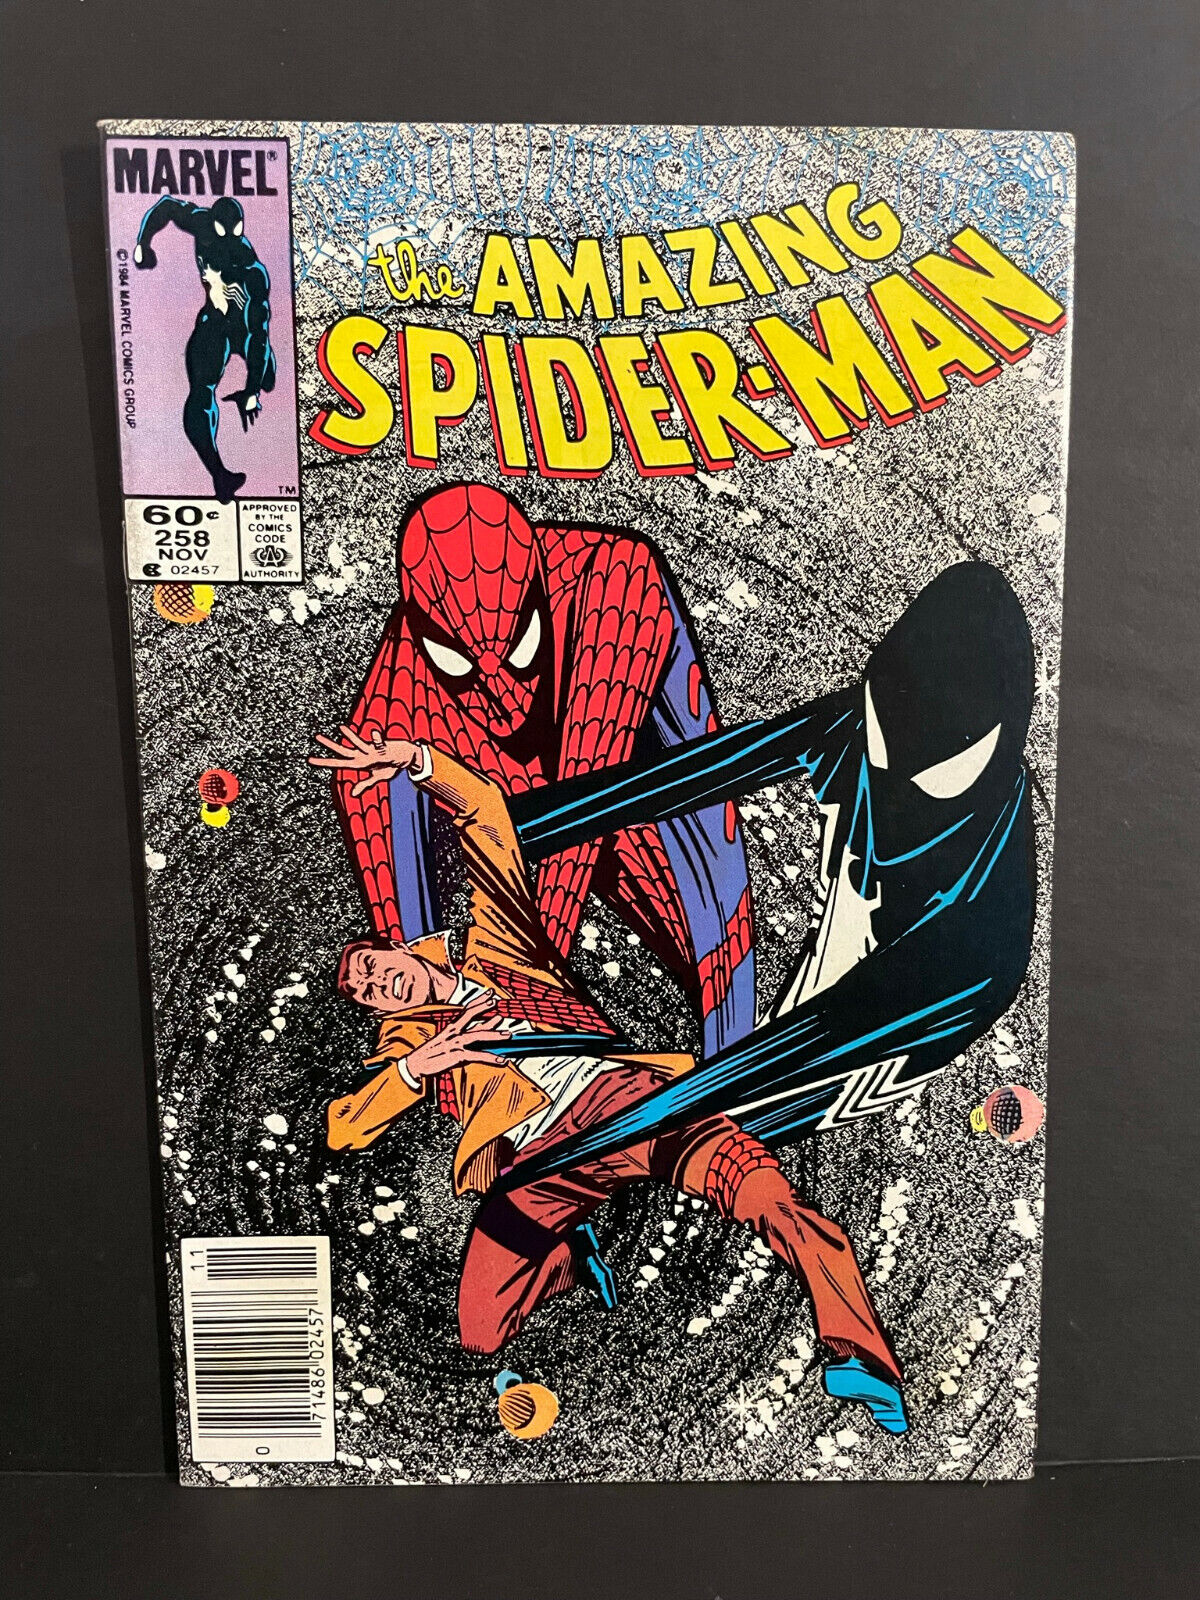 The Amazing Spider-Man # 258, Alien Smybiote Discovered (Marvel 1984)